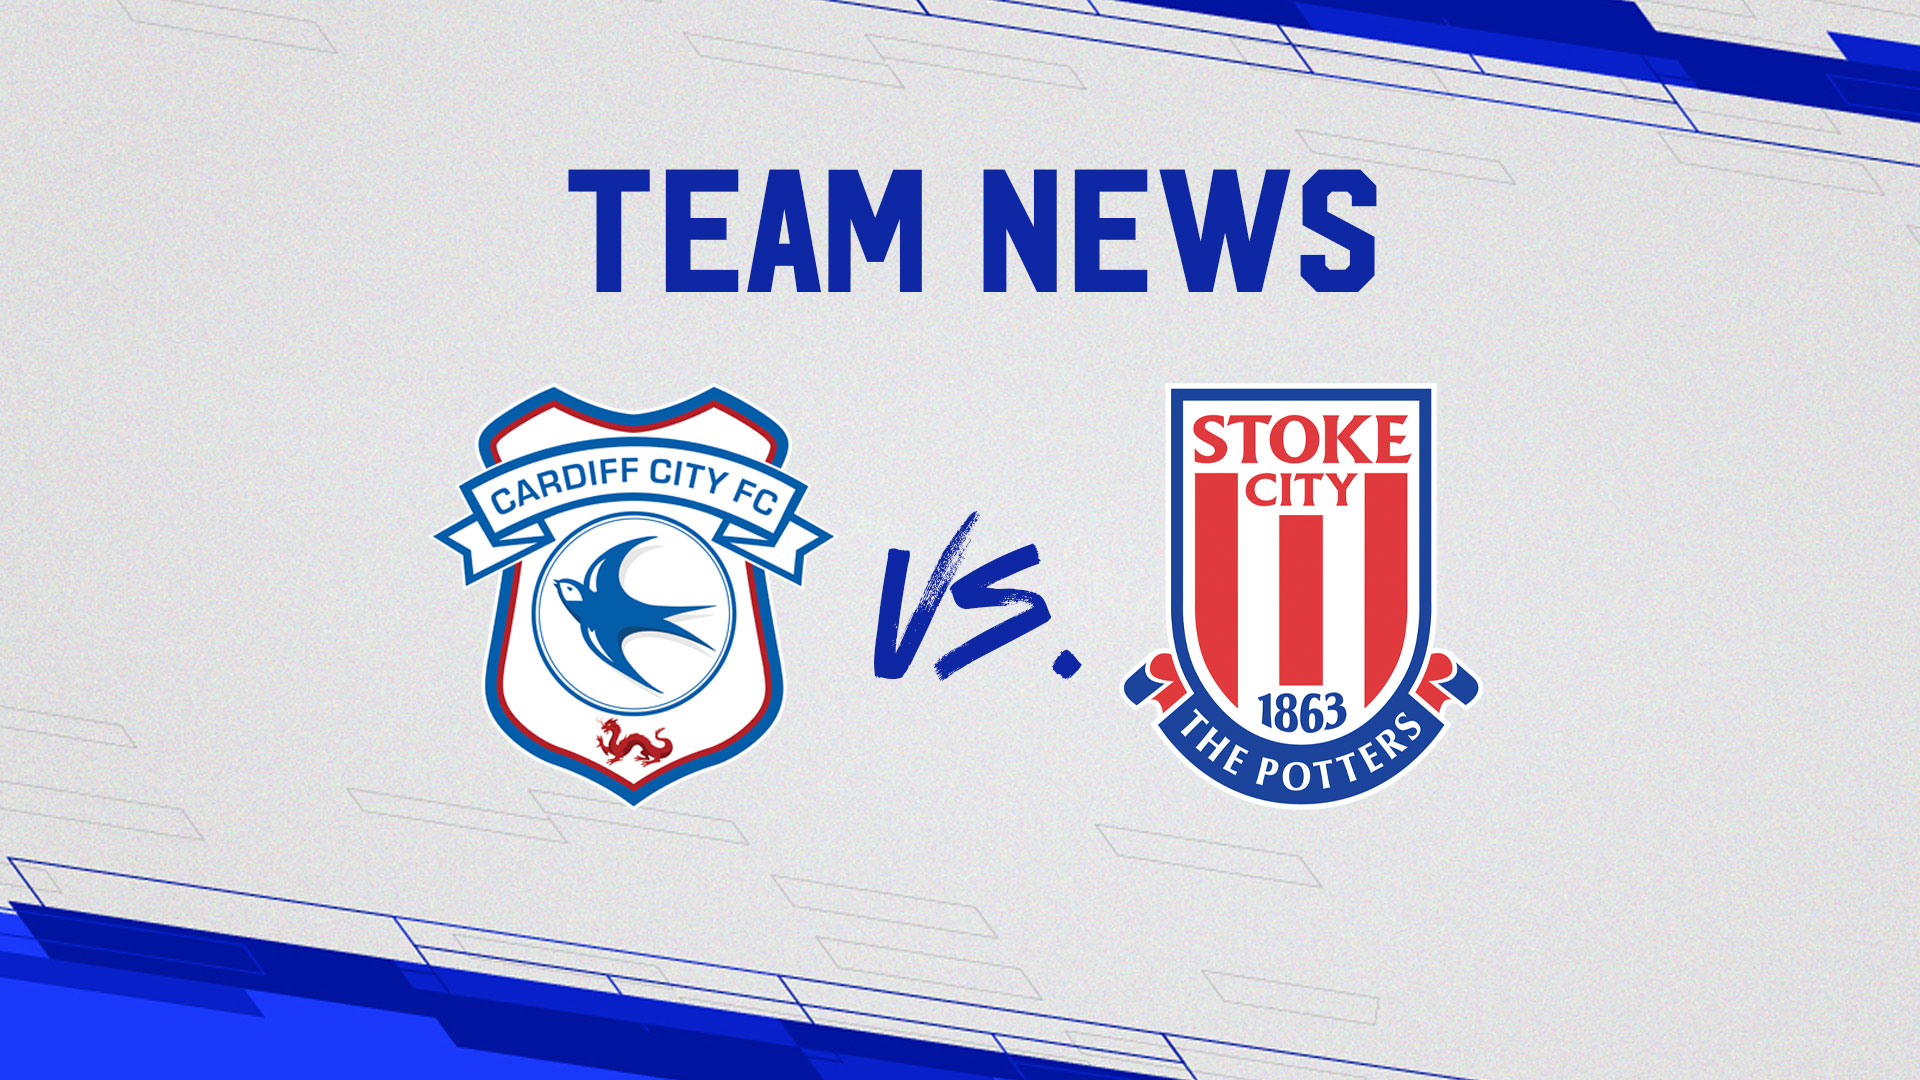 Team News: Cardiff City vs Stoke City